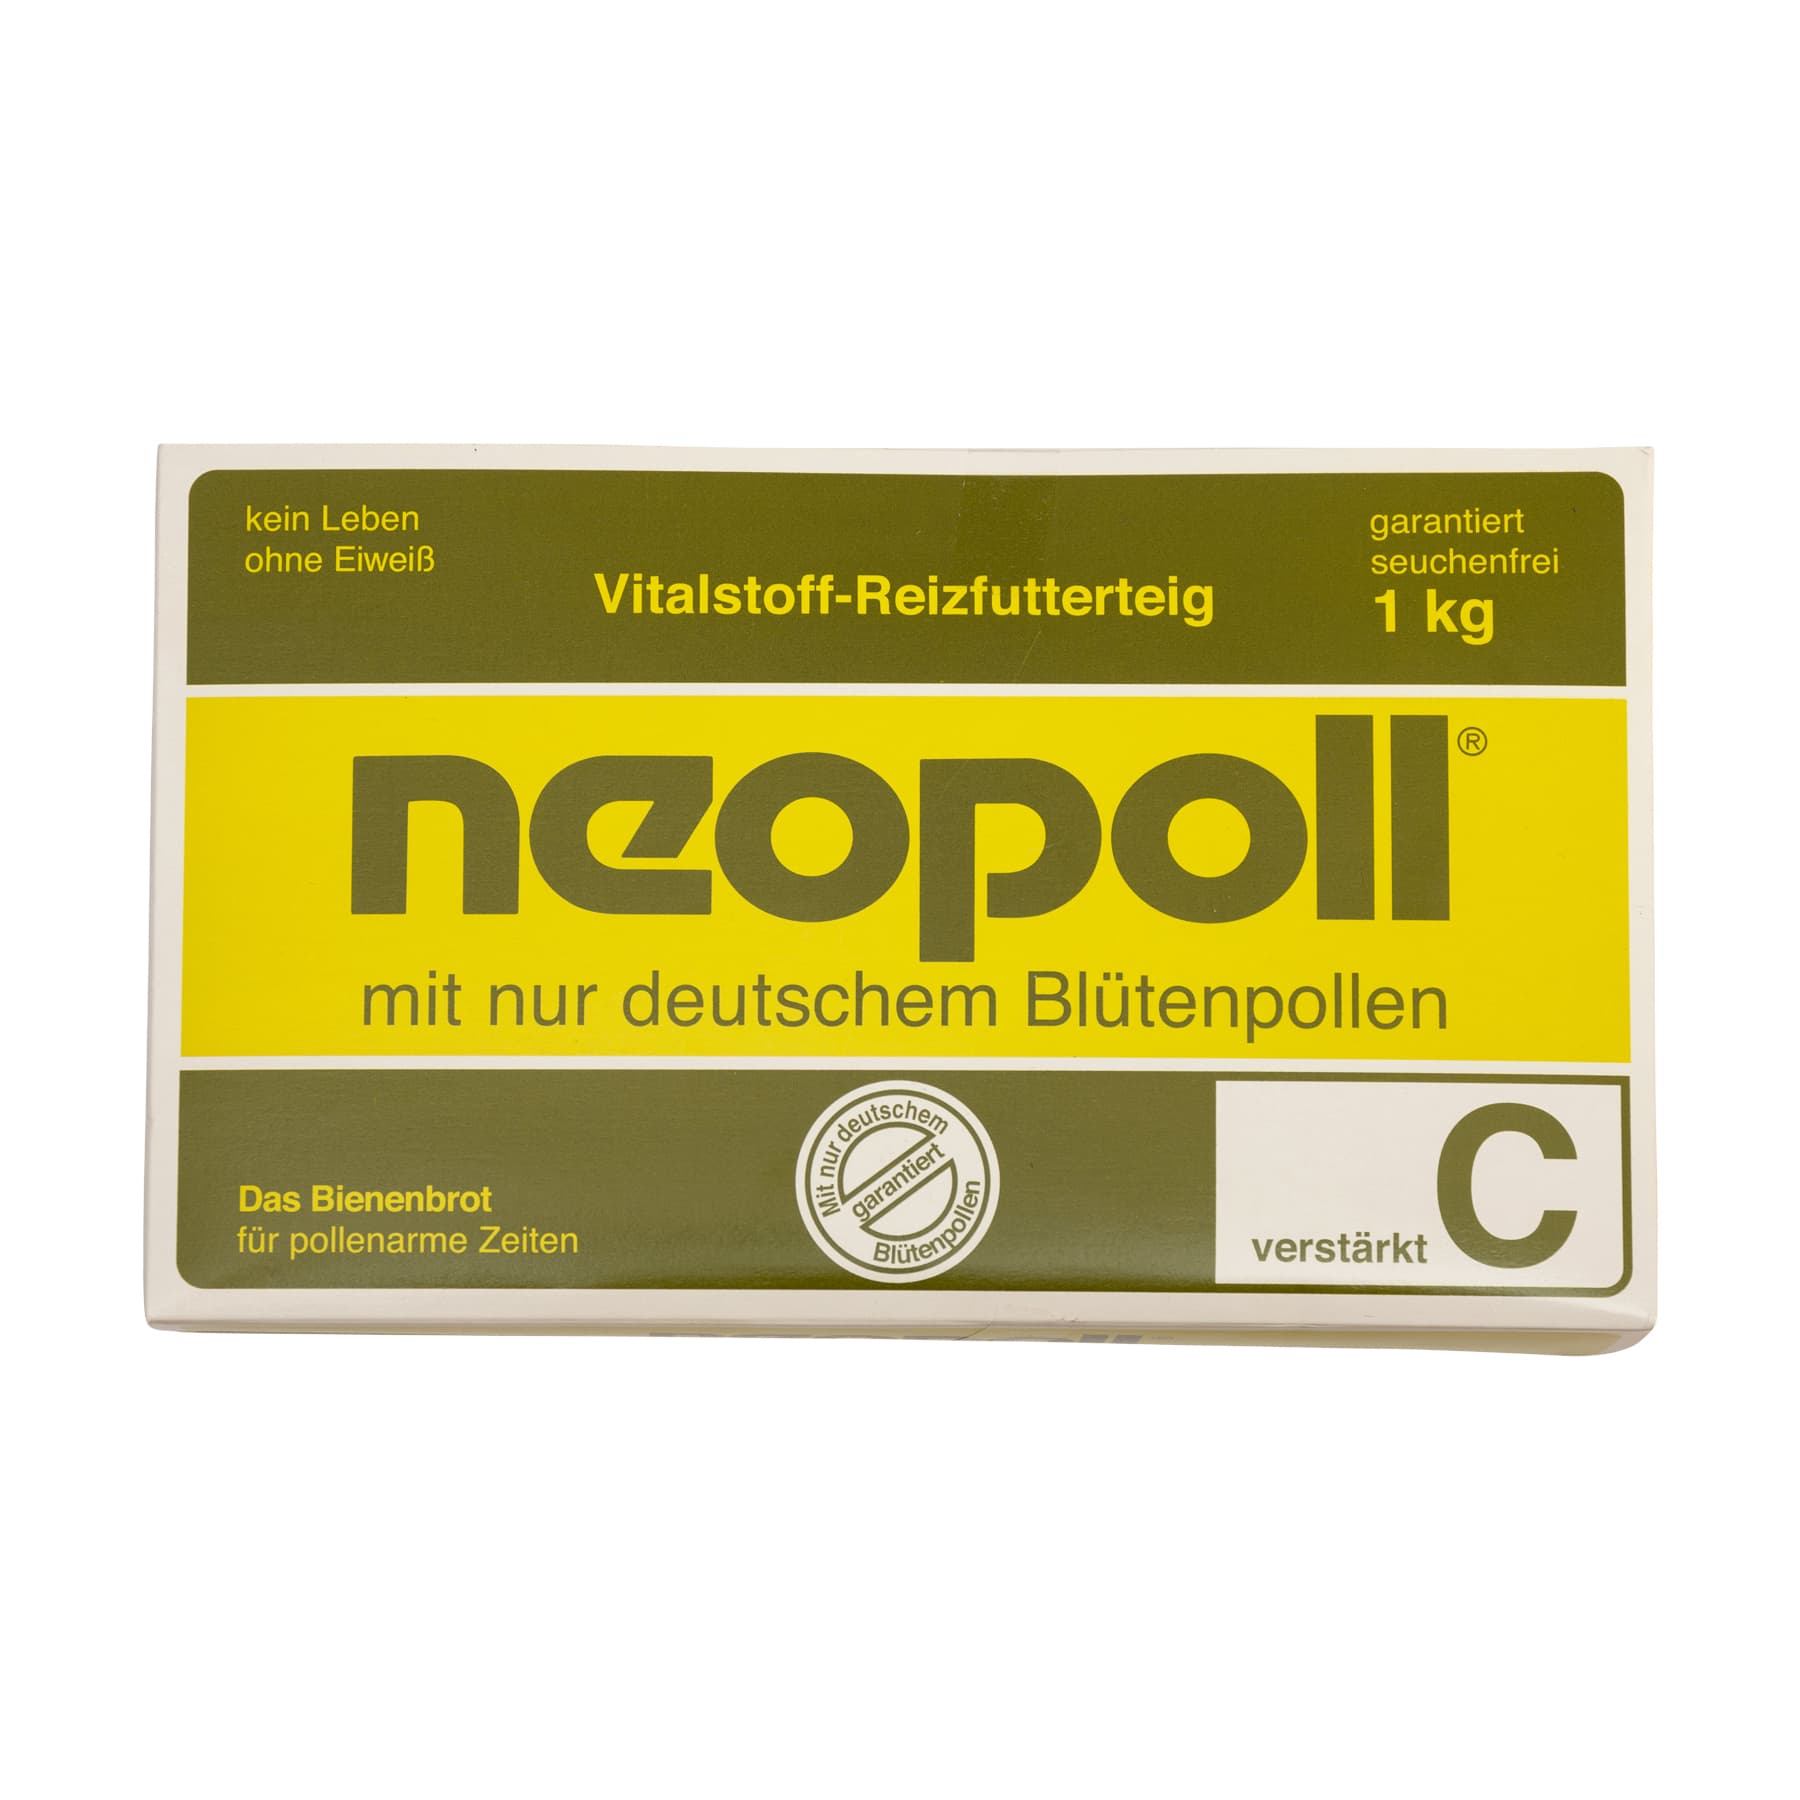 Neopoll C verstärkt 1 kg